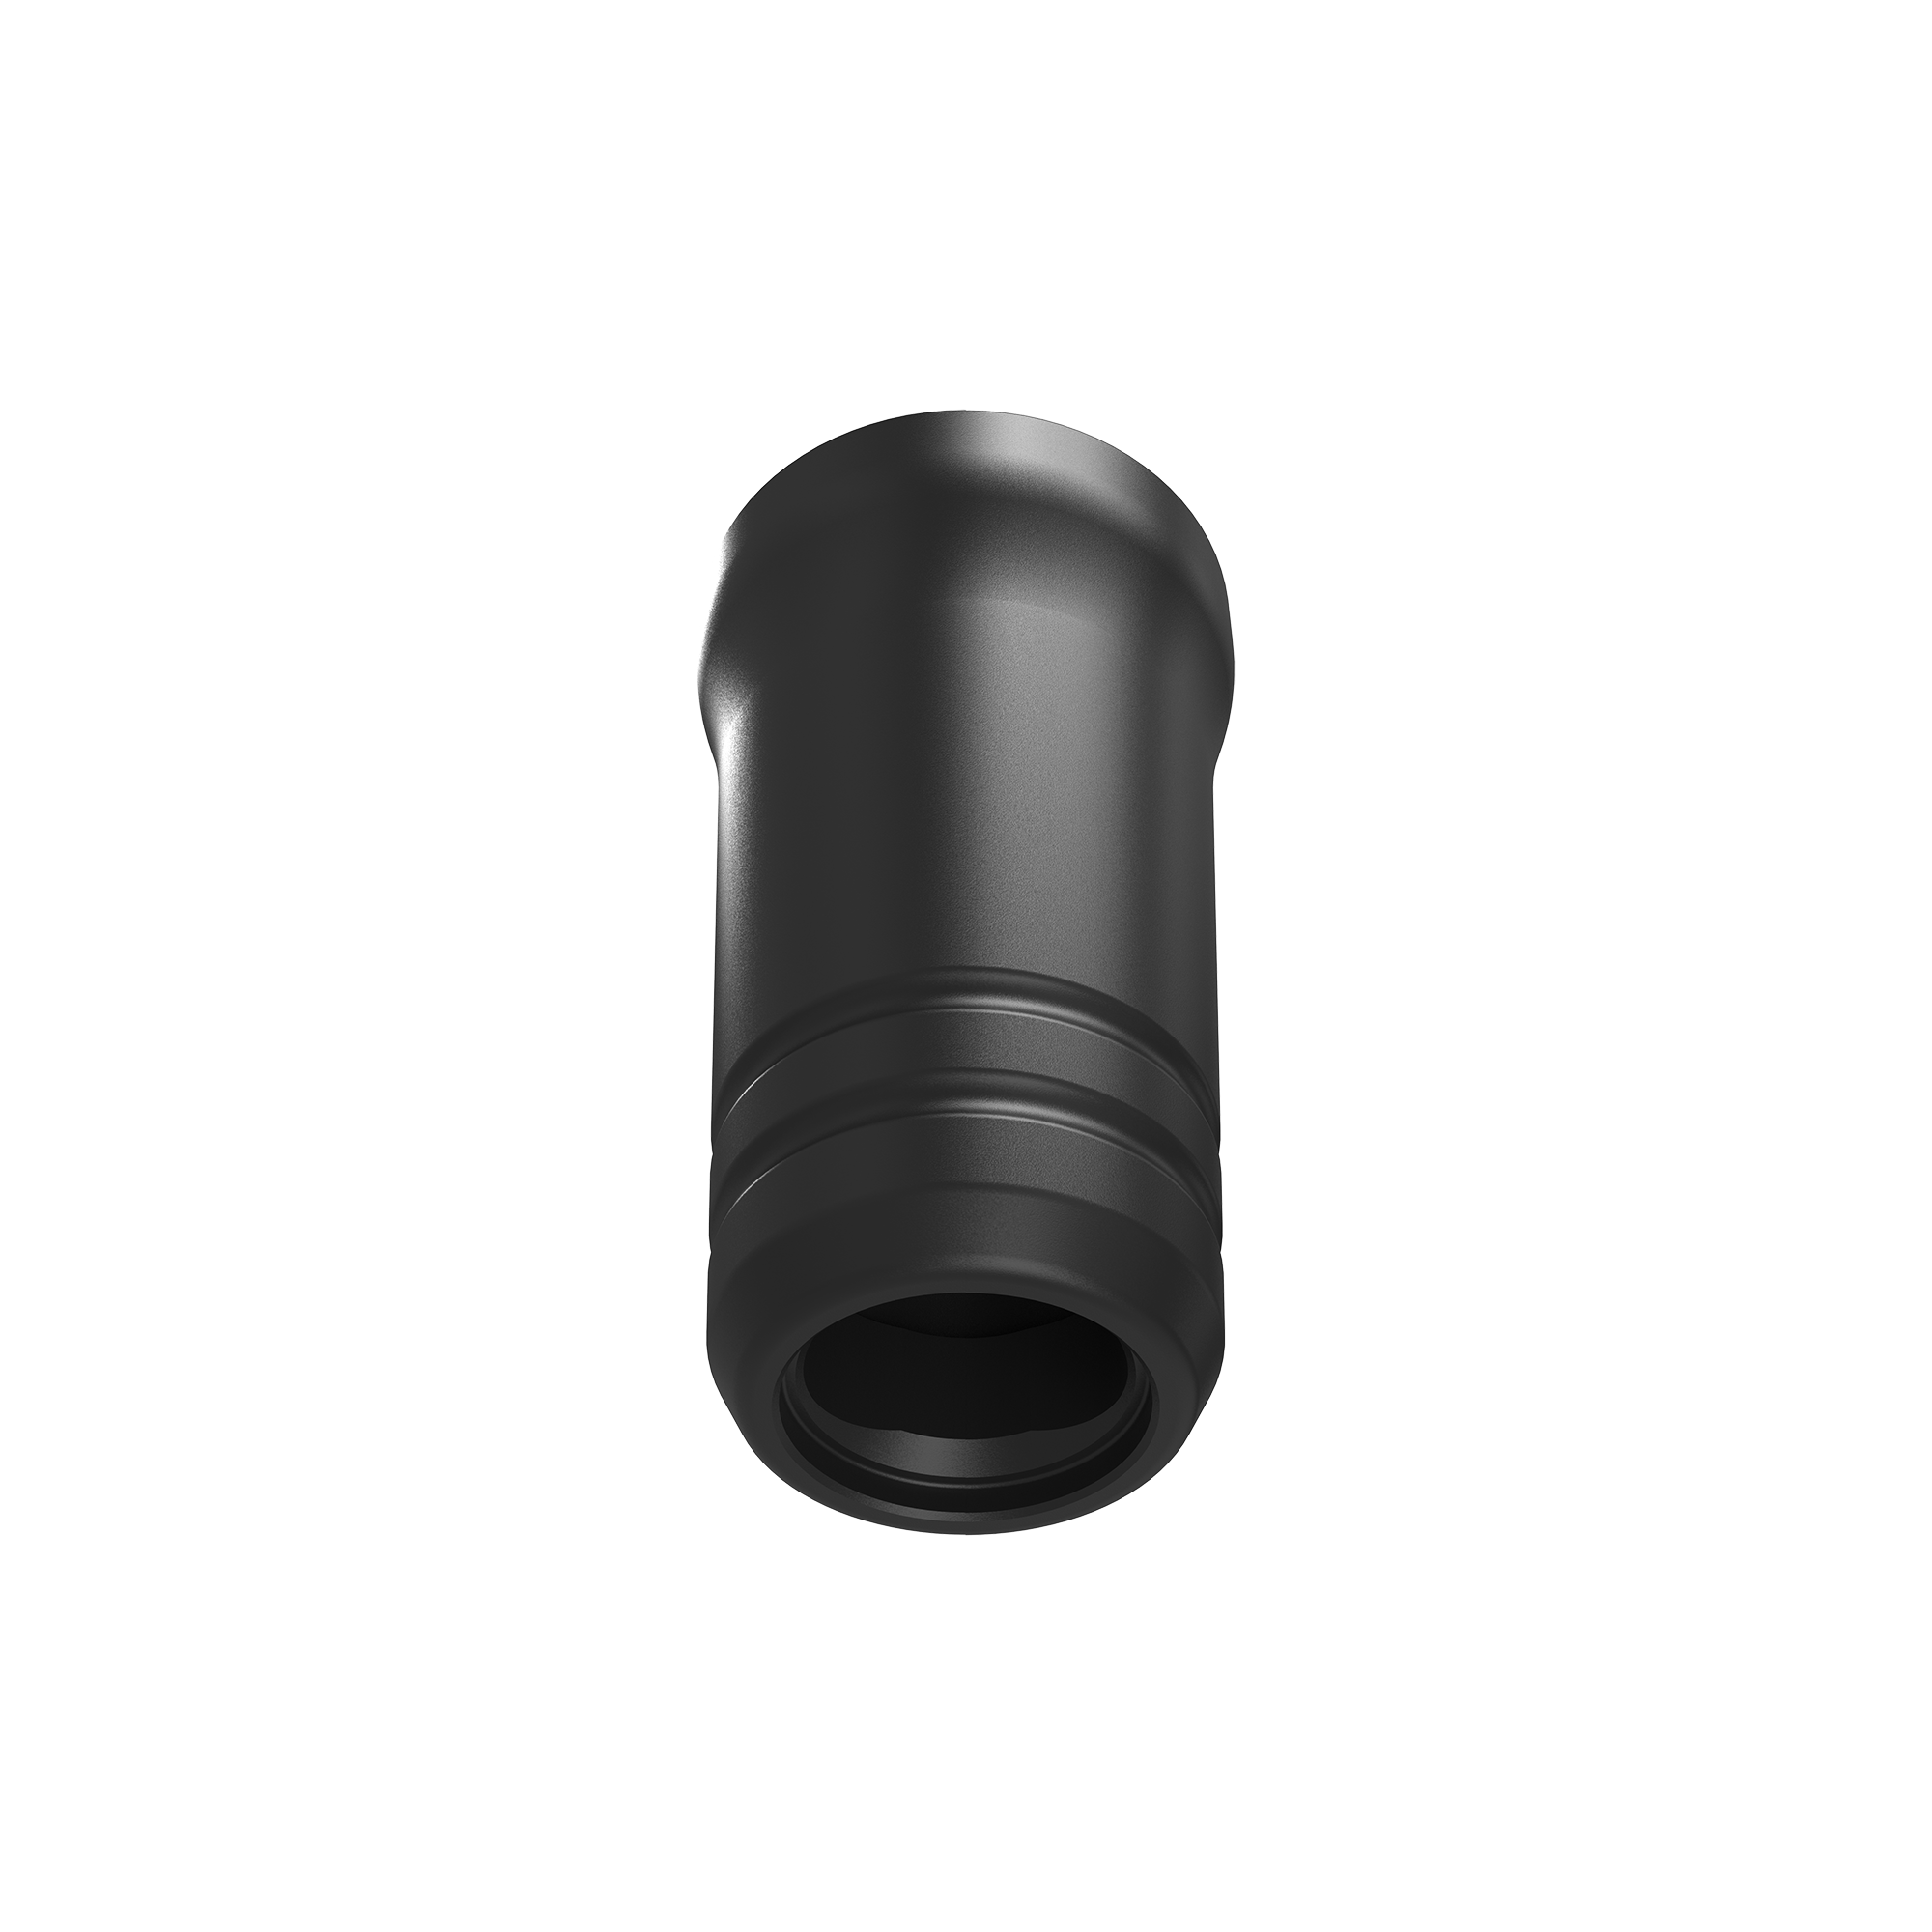 Disposable Mini Grips 26mm for Flux Mini/Xion Mini - Box of 24